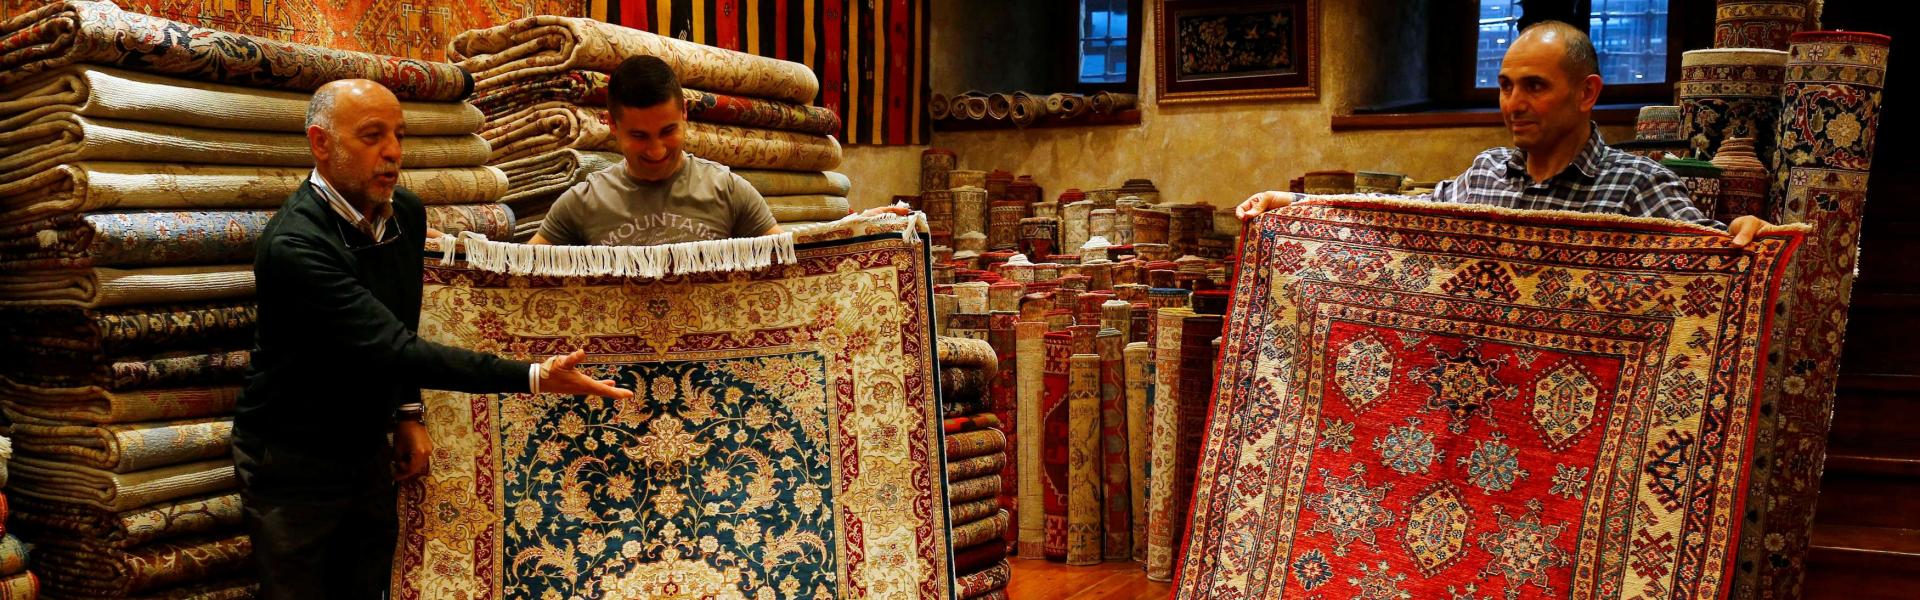 Turkey's economic crisis crushes famed carpet industry 4